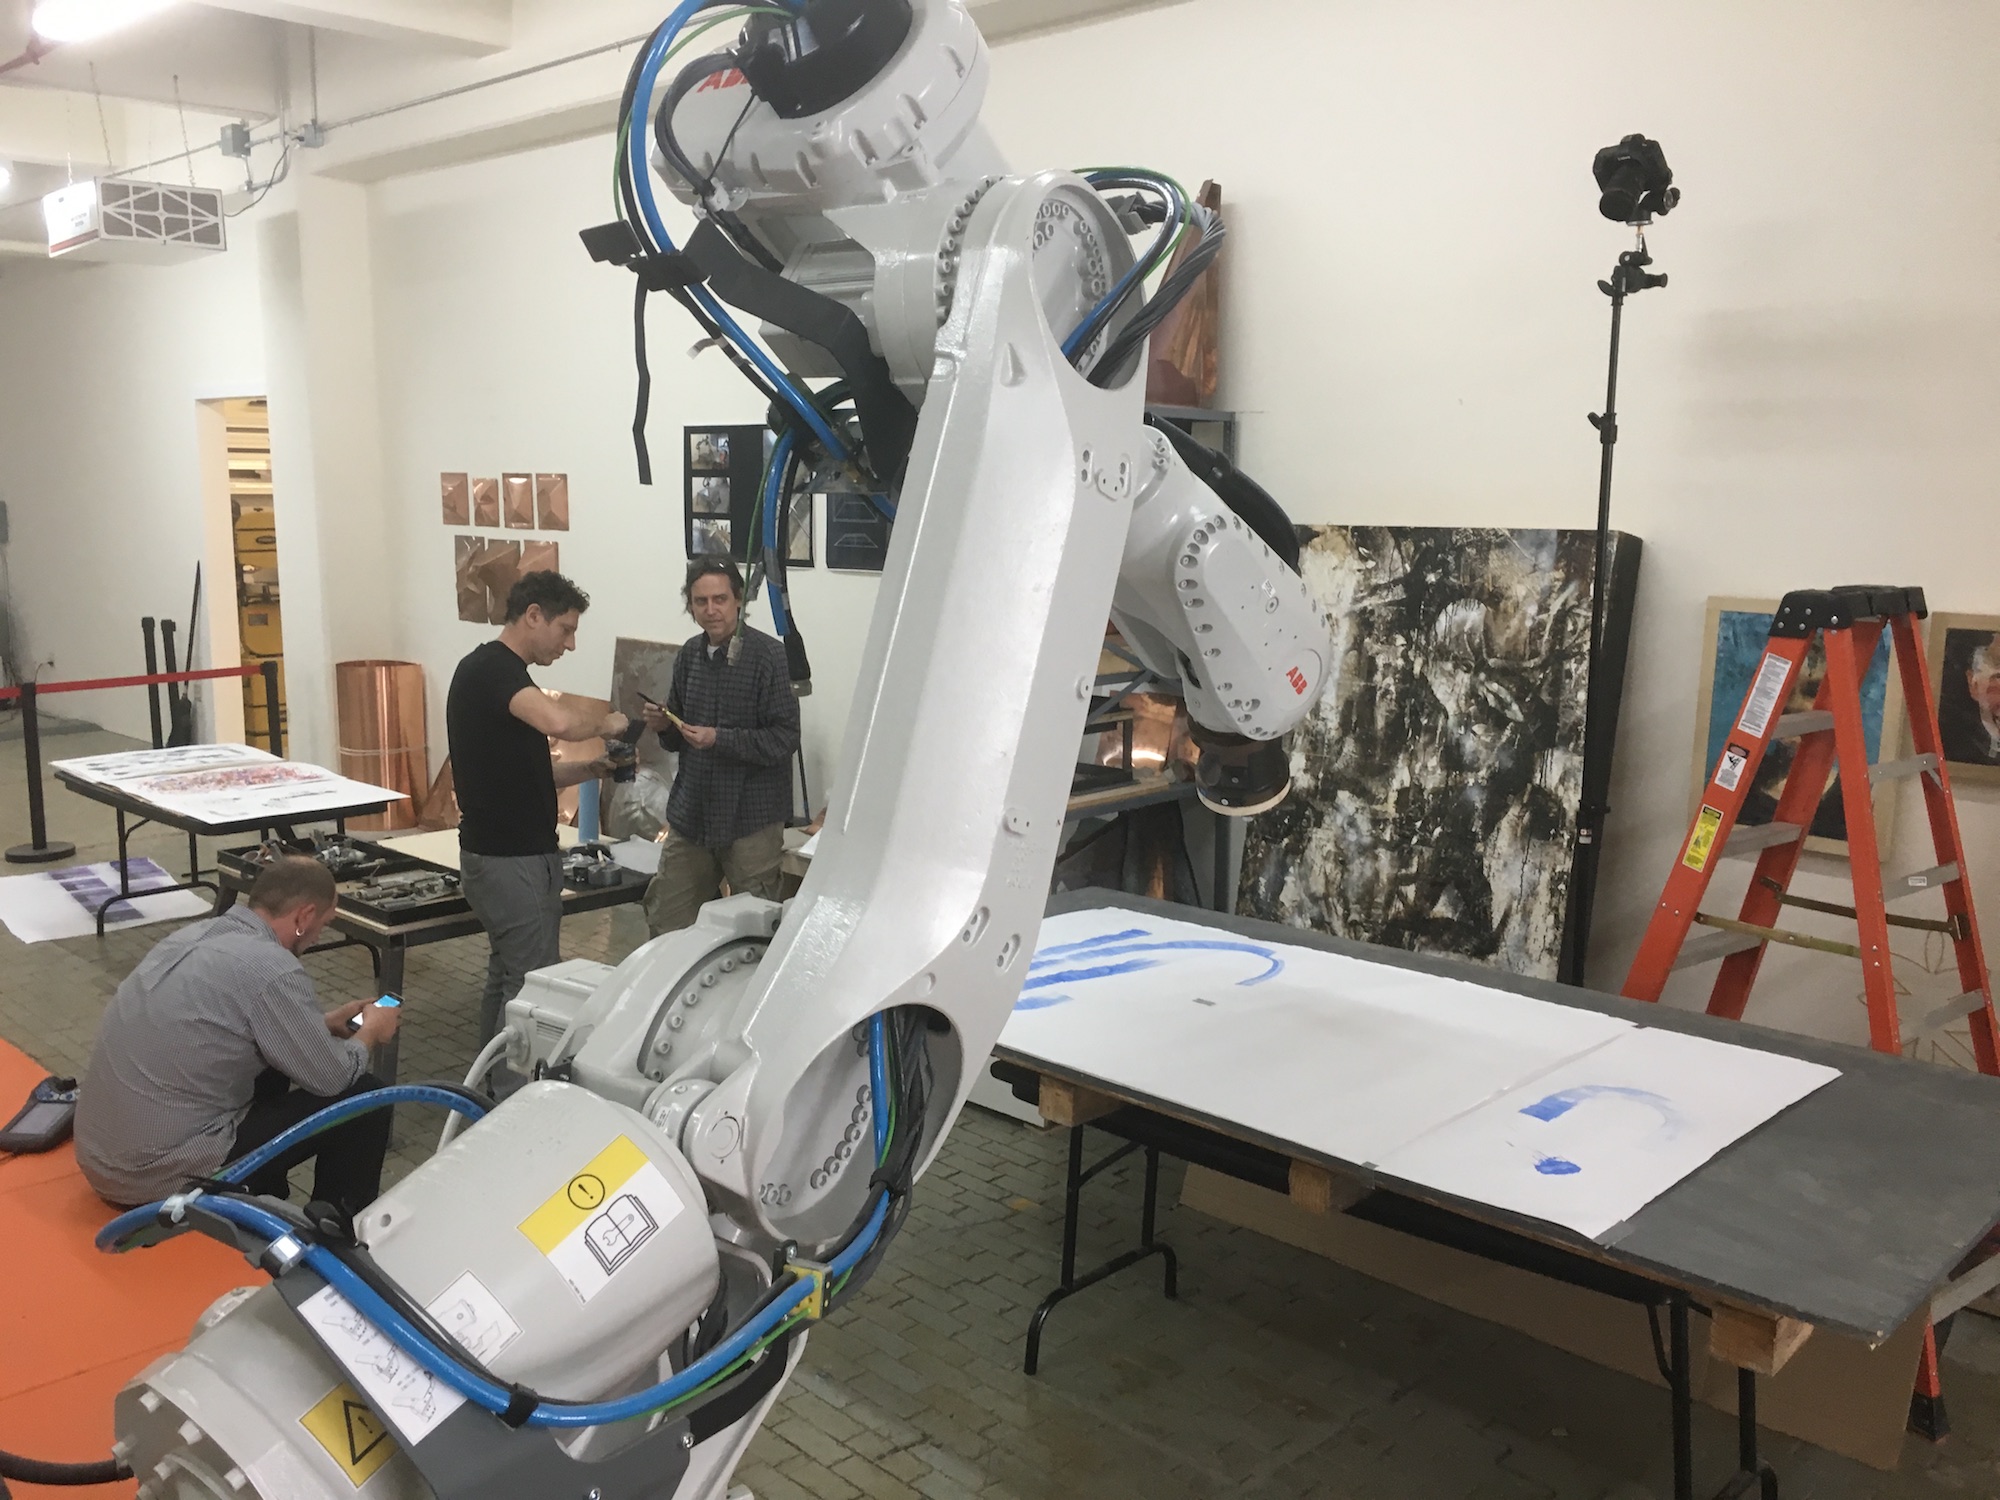 Artmatr creating robotic art at CRR 